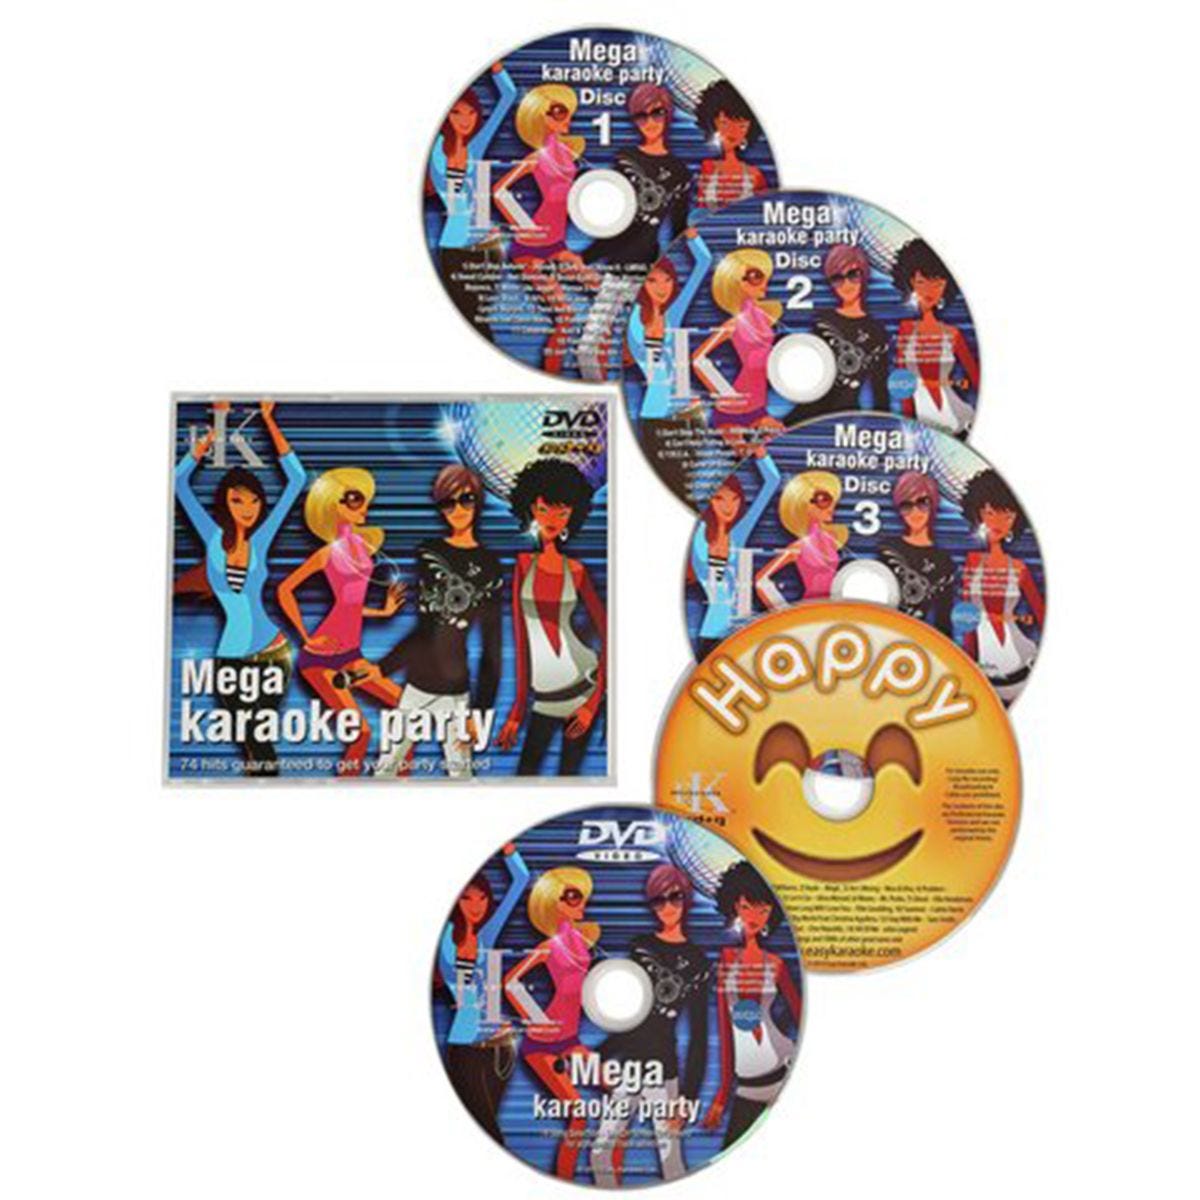 Easy Karaoke Mega Party Hits CD+G and DVD Pack | Robert Dyas